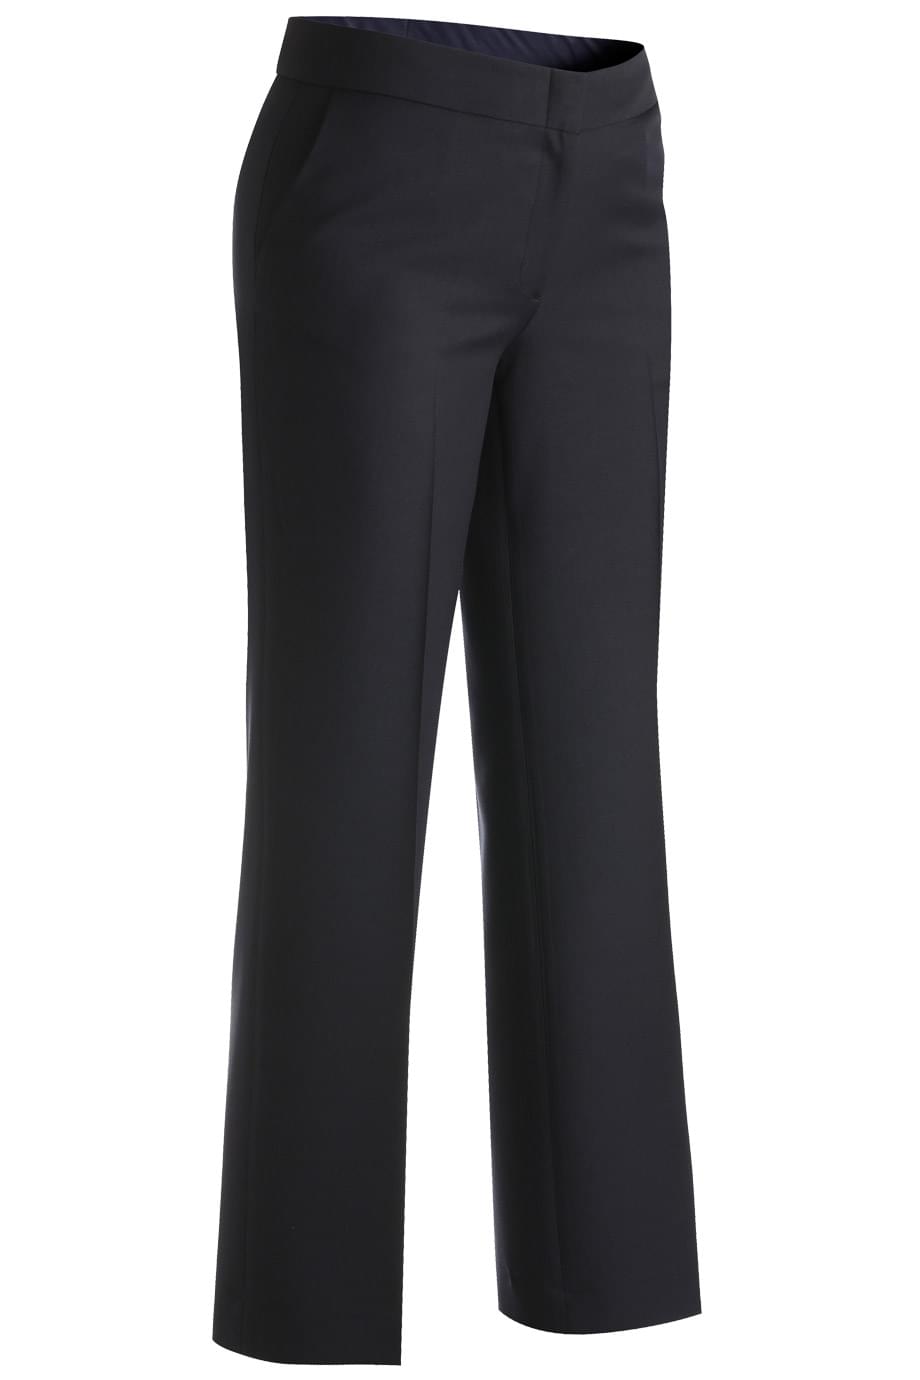 Uniforms - Women's Ladies Dress Pants Flat Front, washable Synergy fabric, Mid-rise